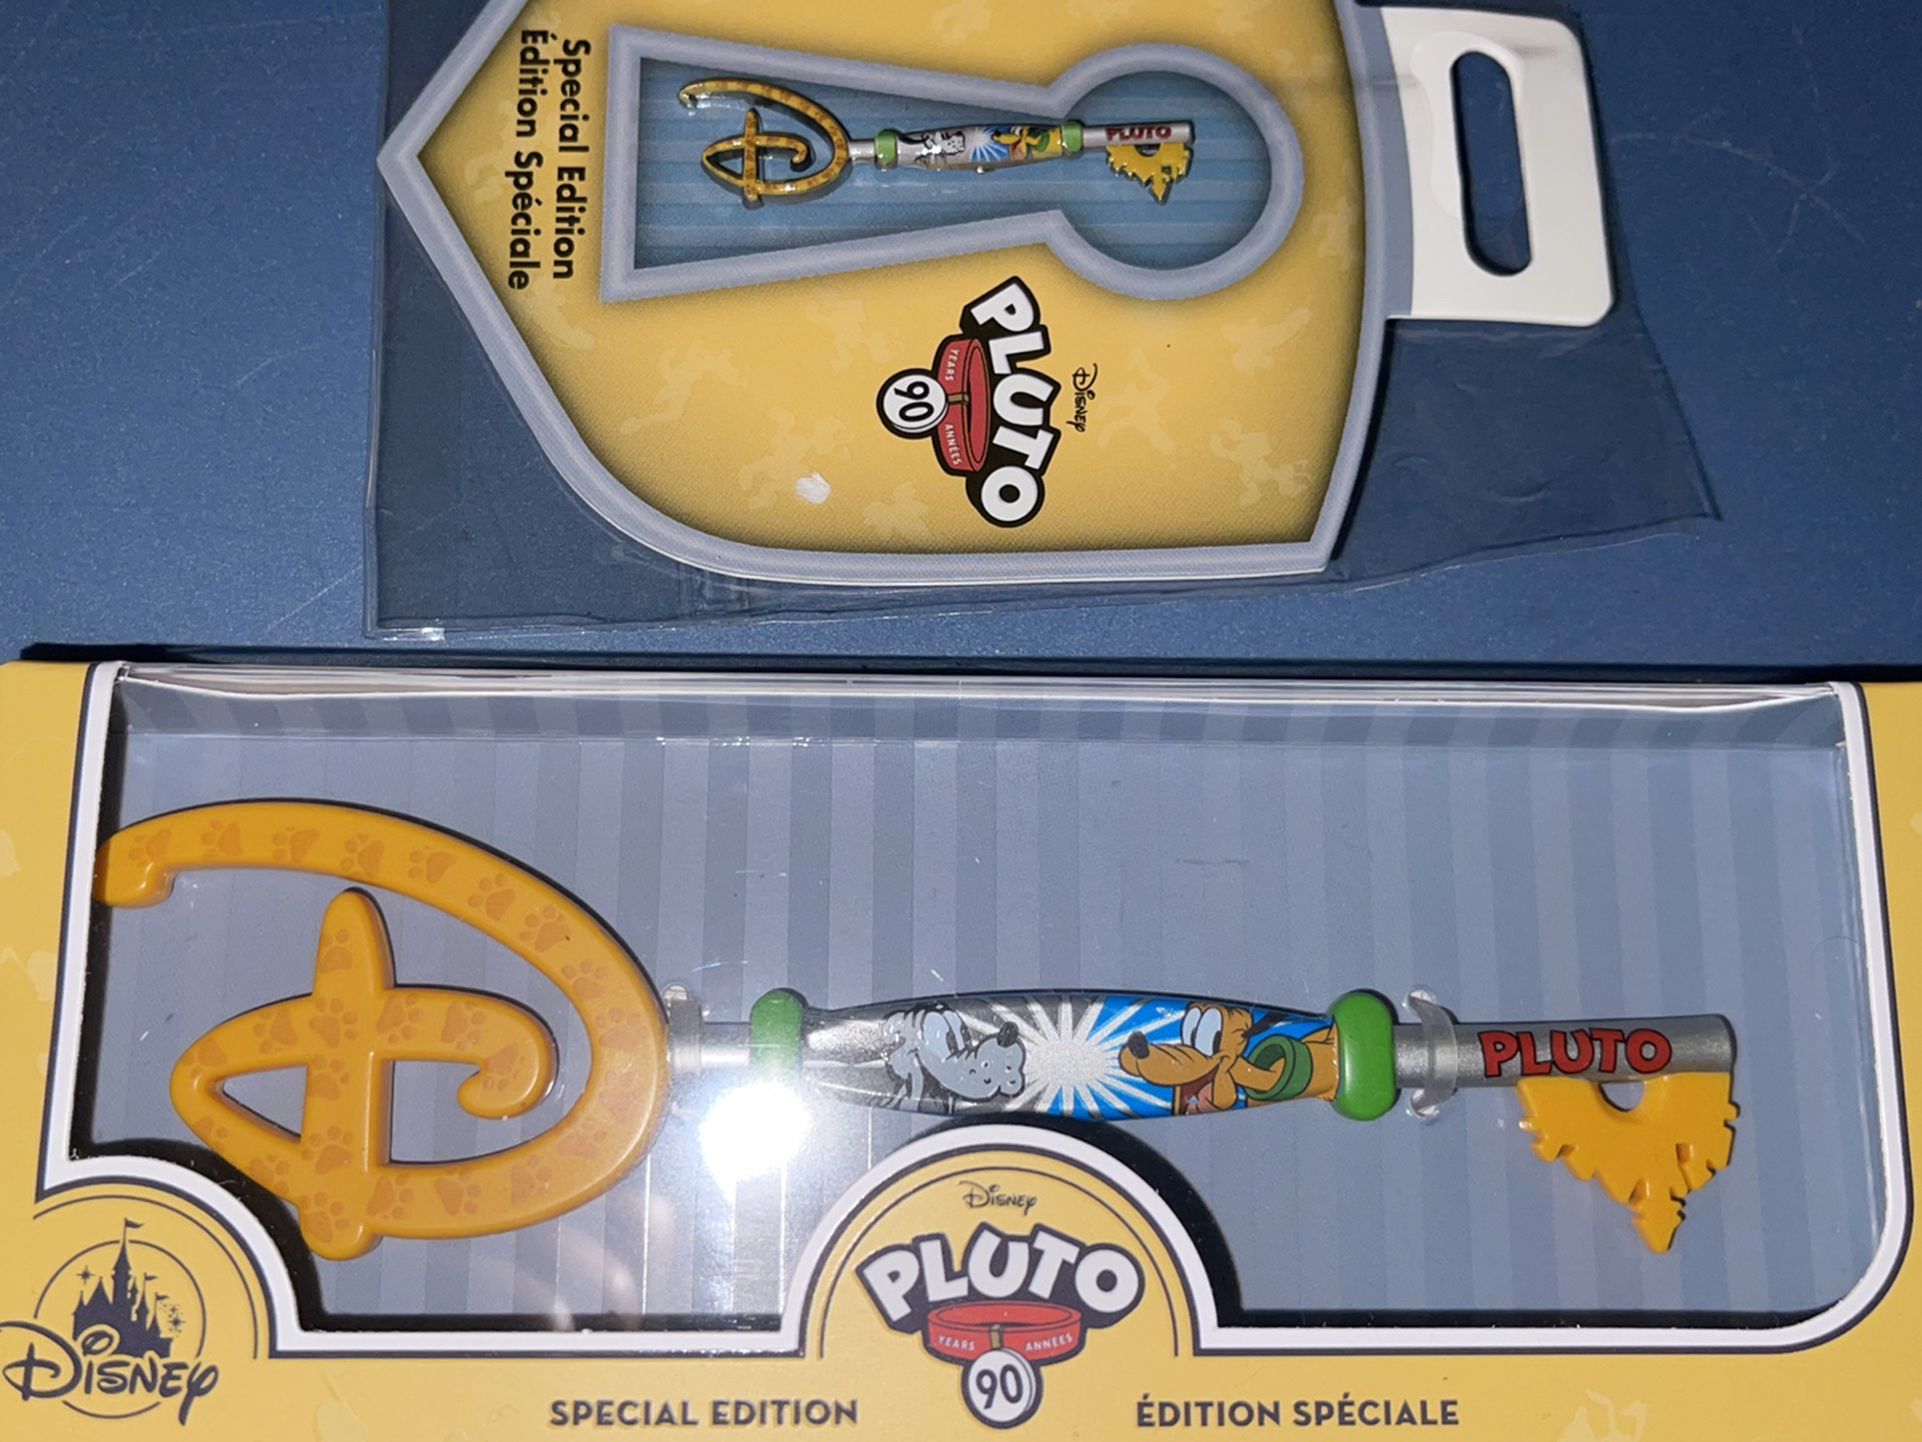 Disney pluto limited edition key set